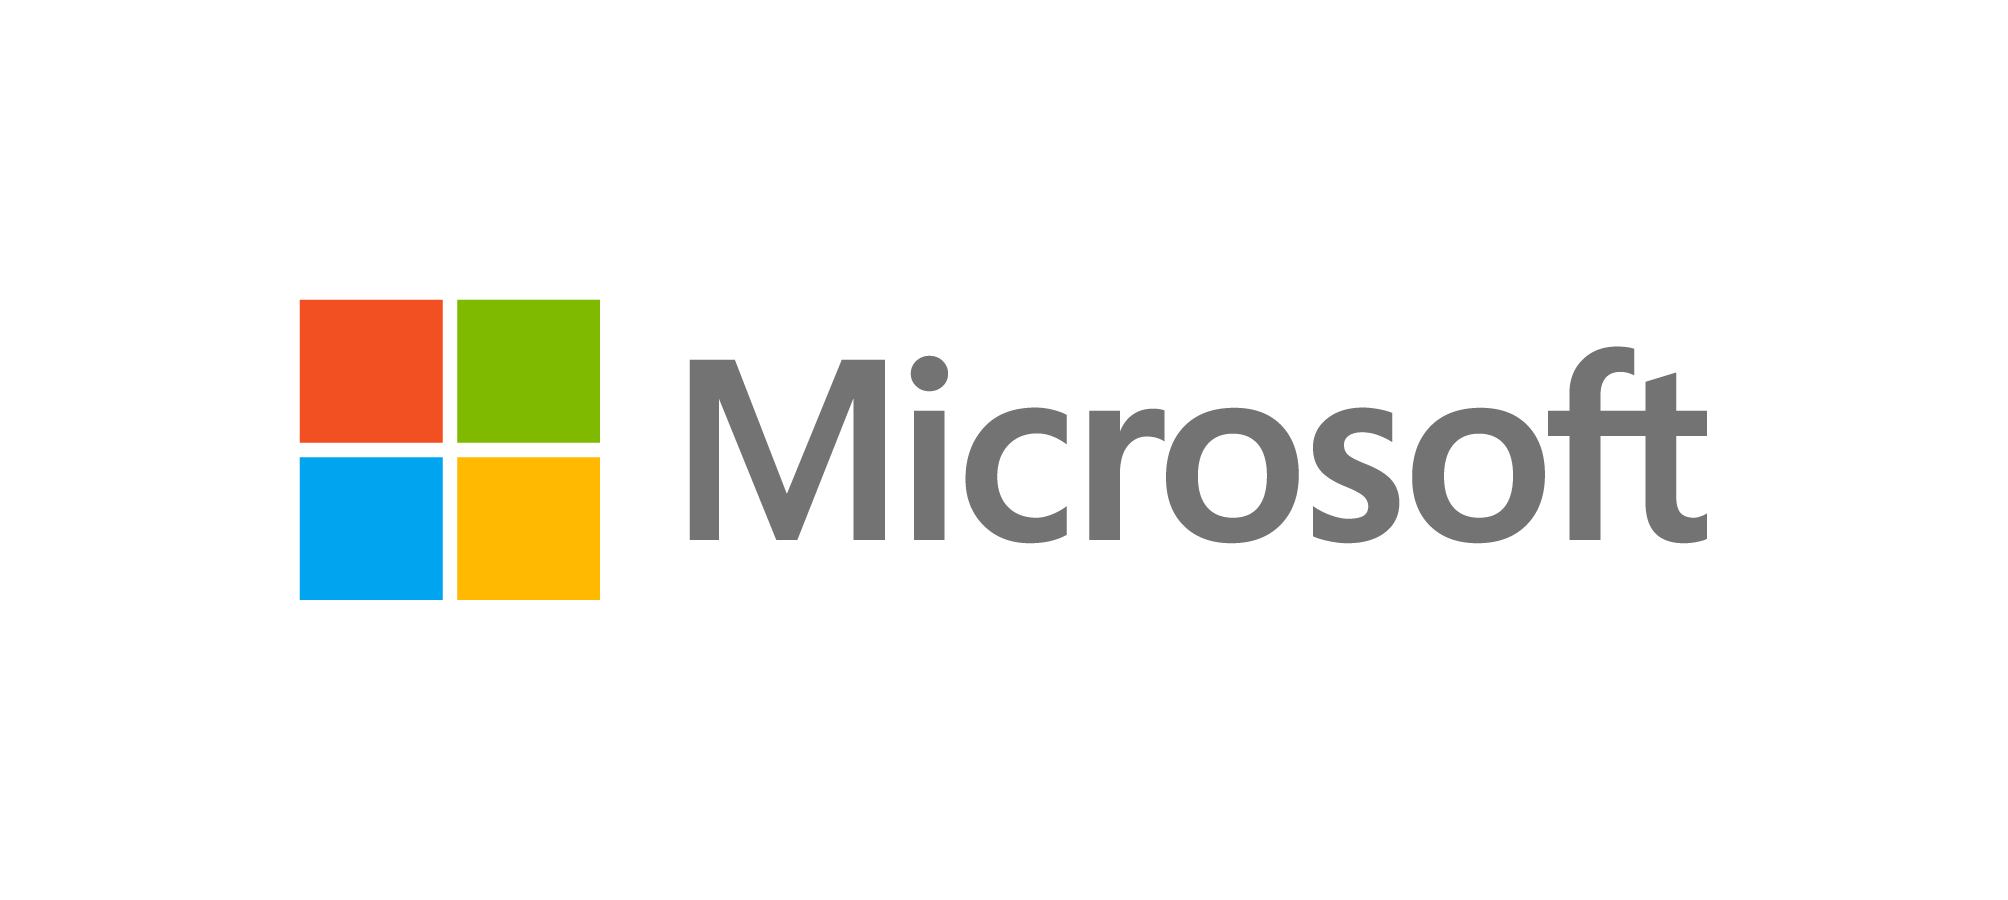 Microsoft-logo_rgb_c-gray